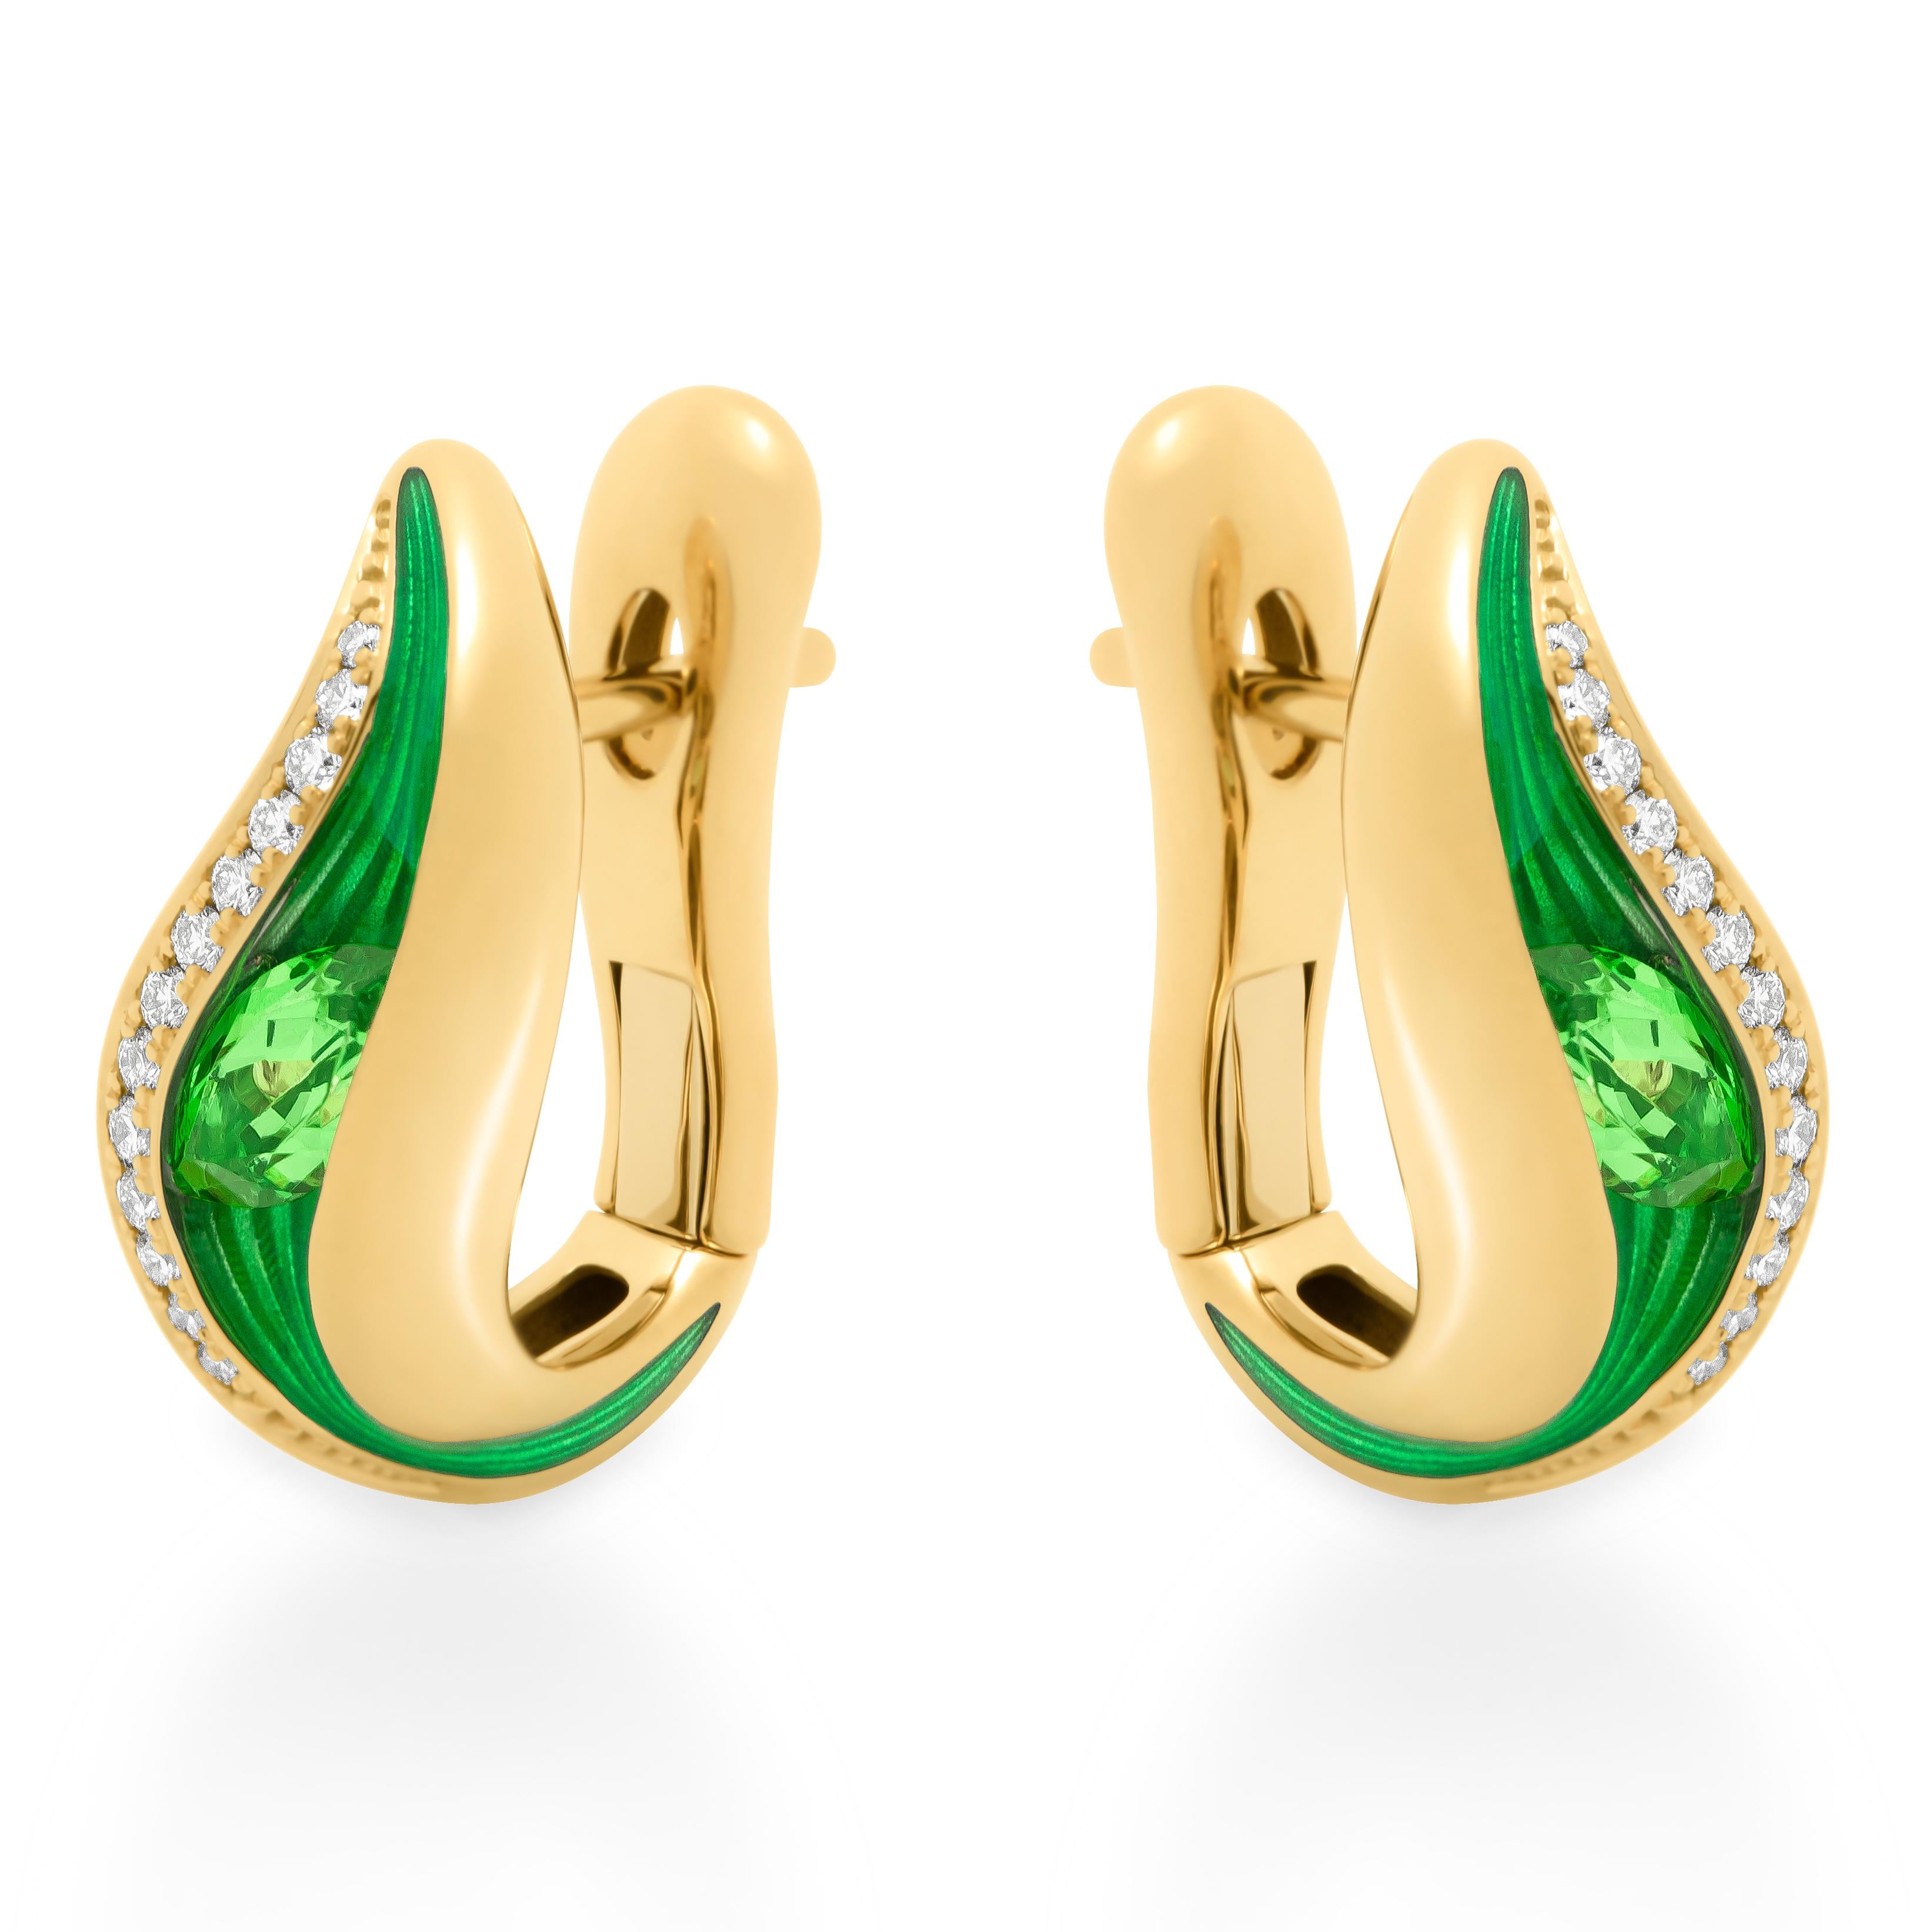 Tsavorit 0,56 Karat Diamanten Emaille 18 Karat Gelbgold Geschmolzene Farben Ohrringe
Unsere neue Kollektion 